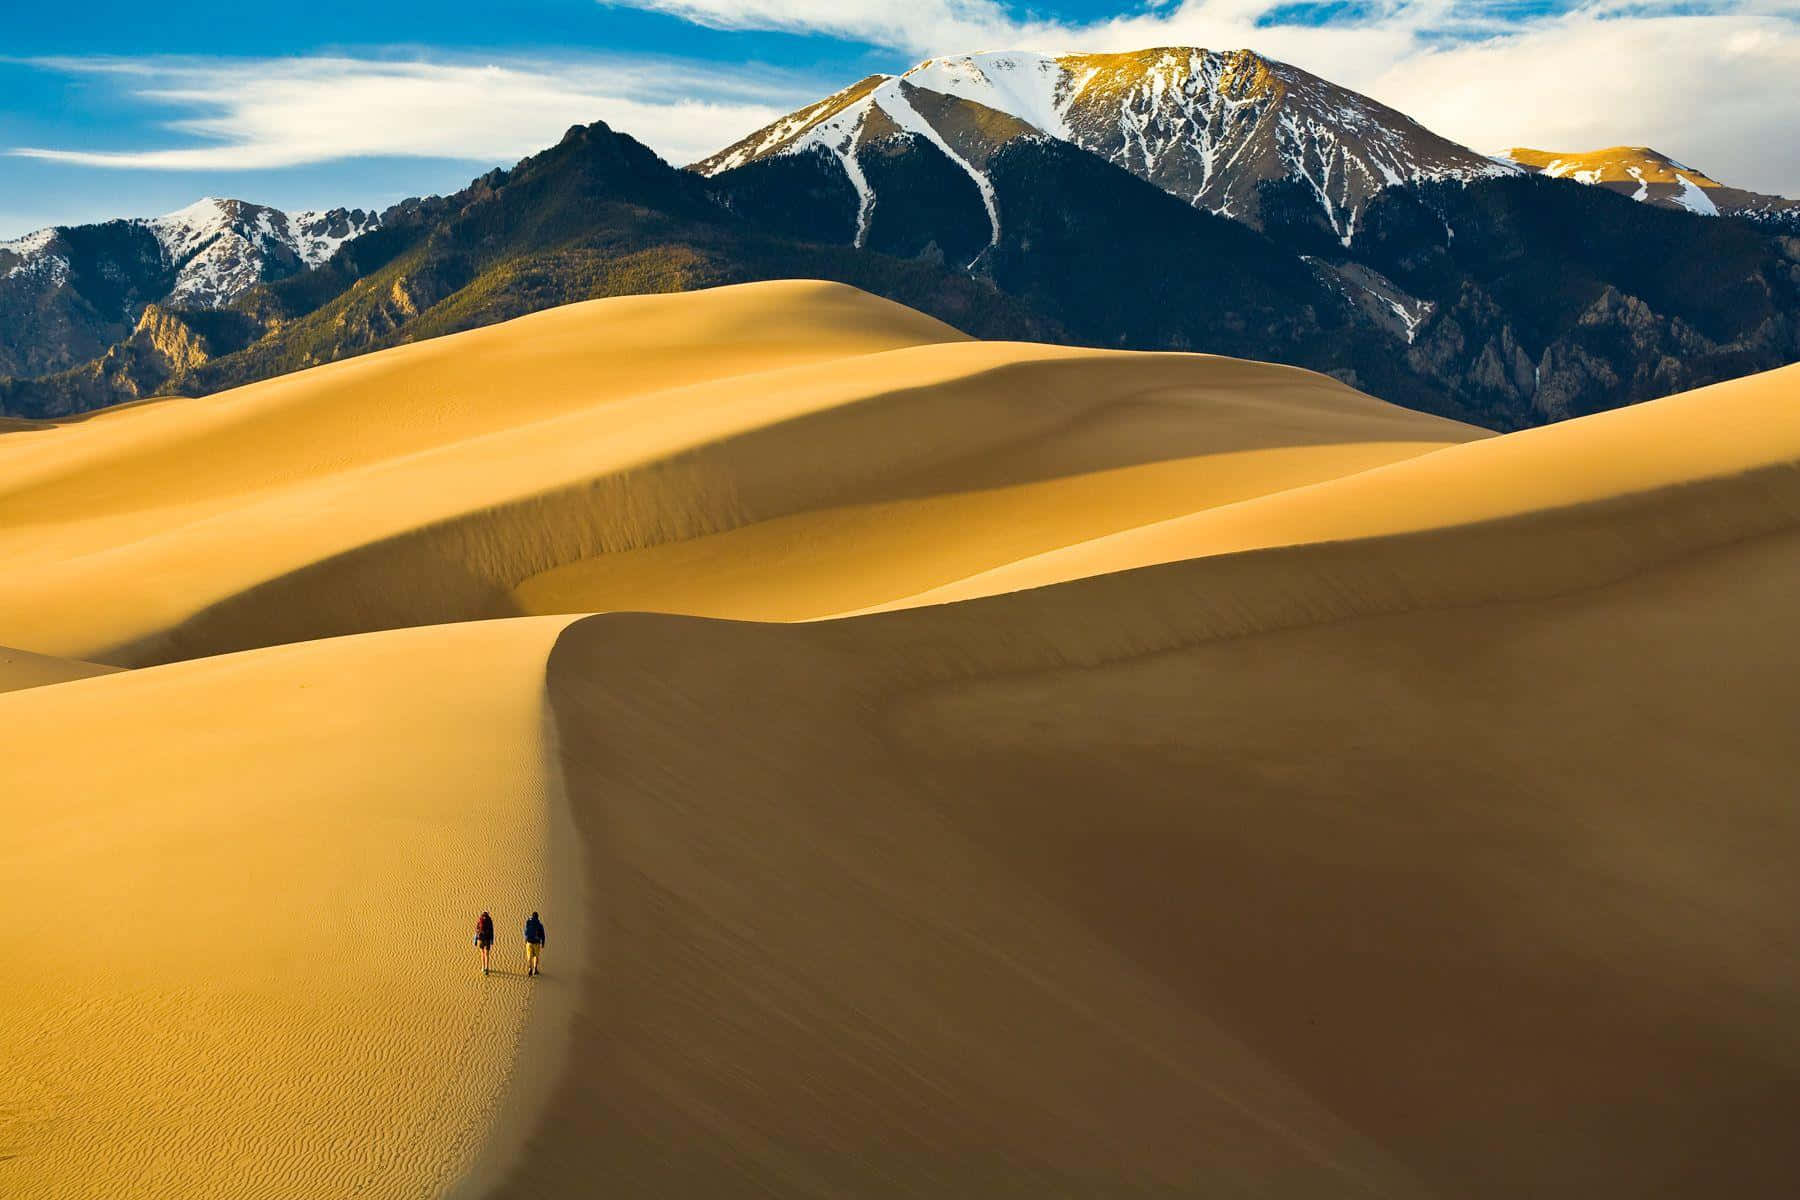 An epic desert landscape on the fictional planet Arrakis, better known as Dune.